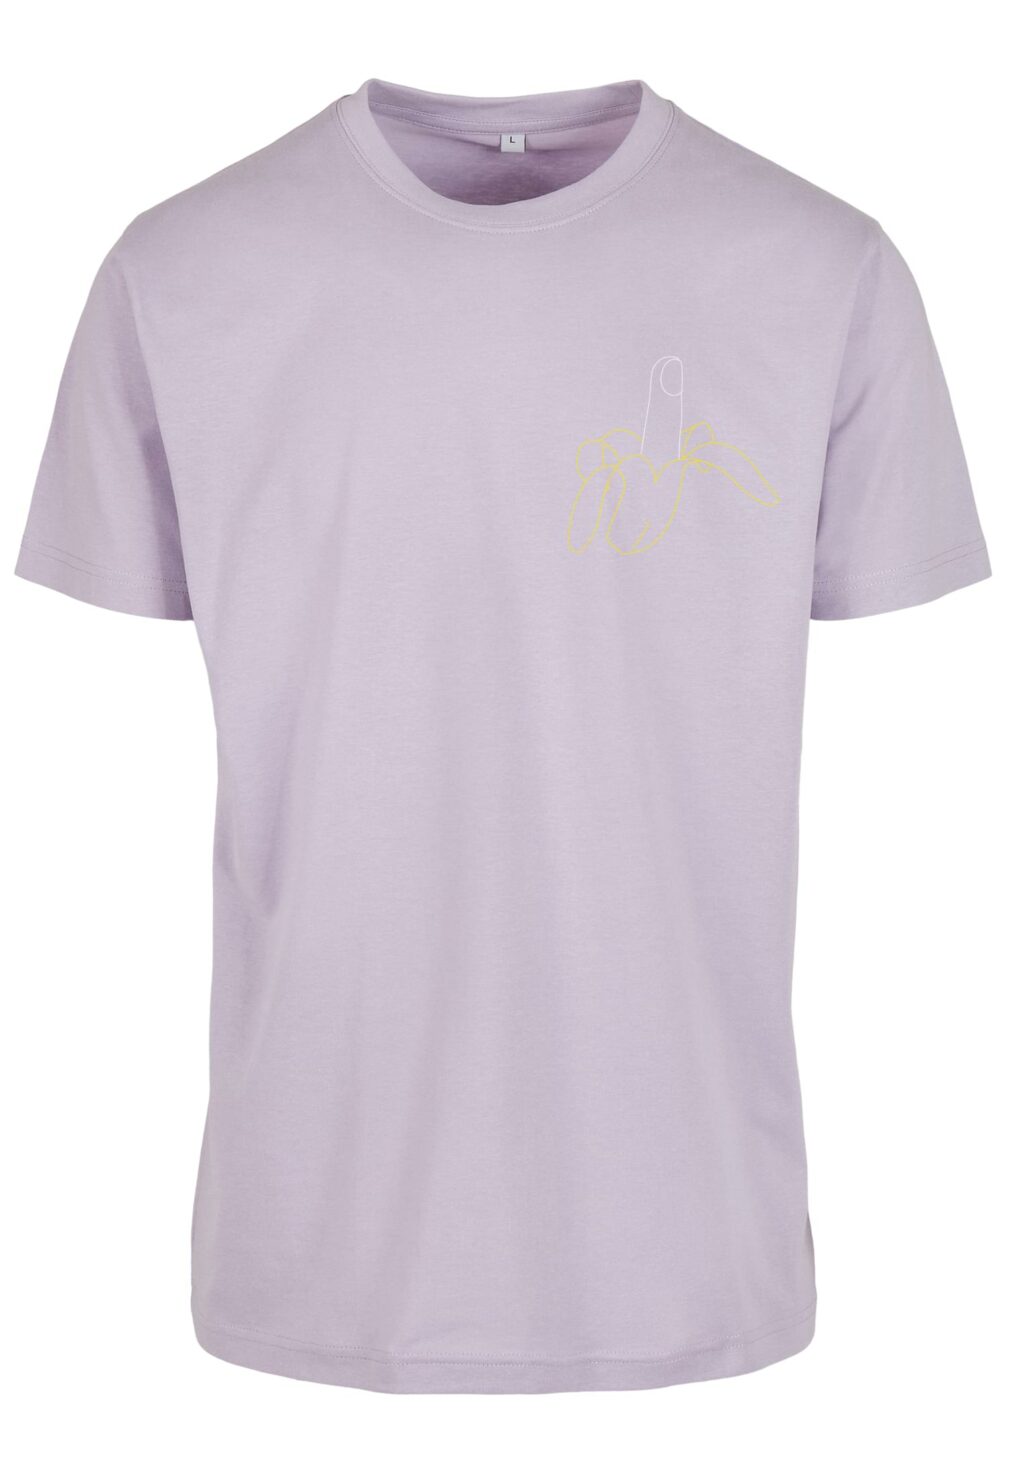 Rude Banana Tee T-Shirt Round Neck lilac MT2395